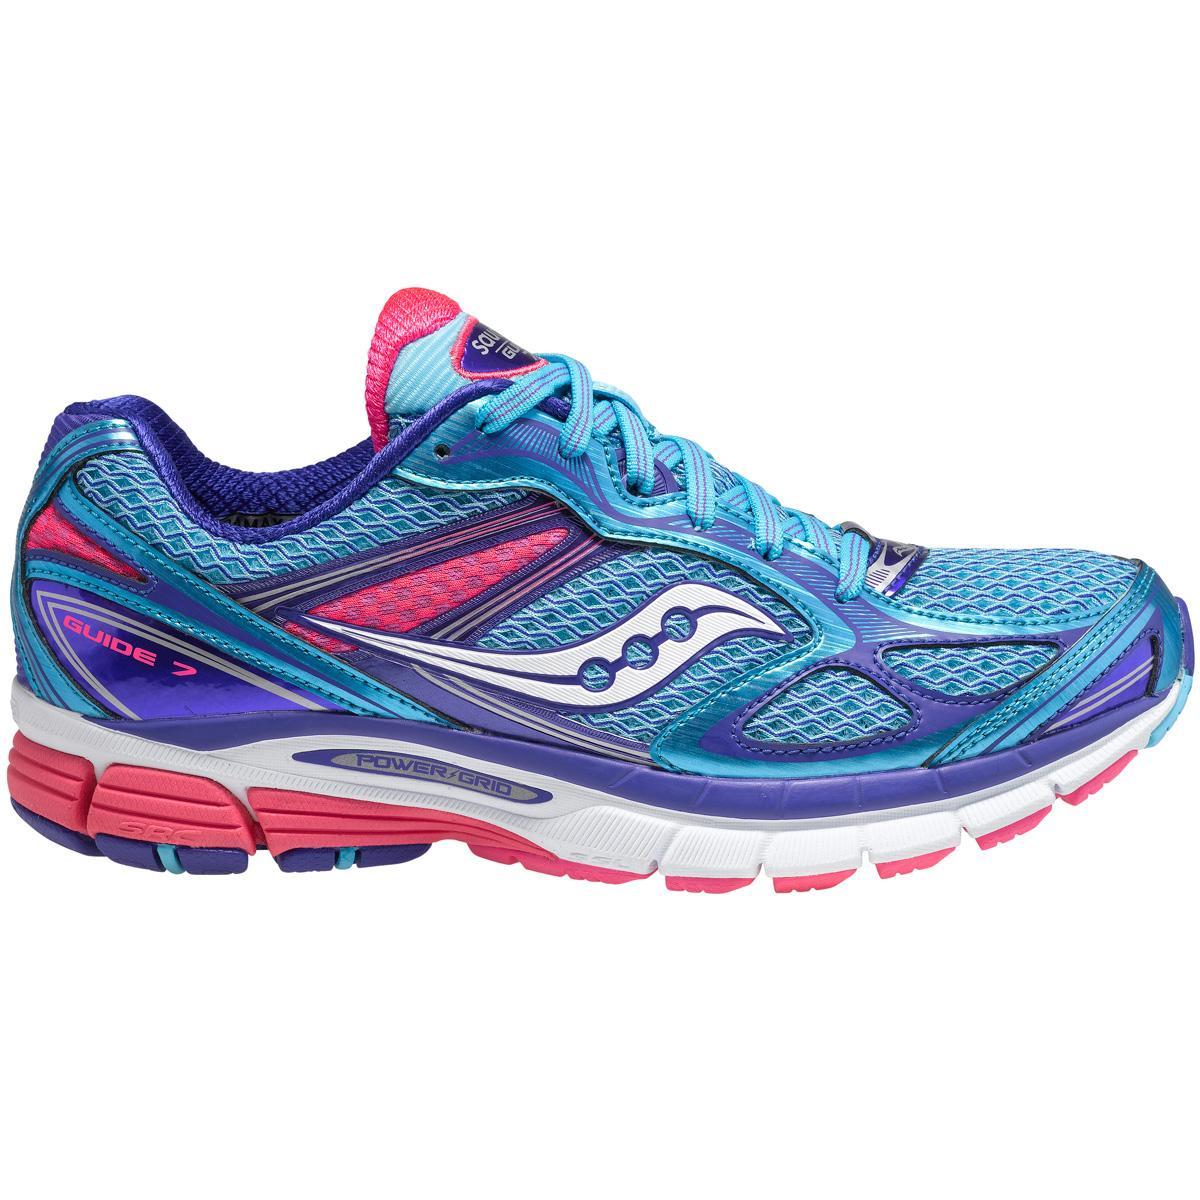 Saucony Womens Guide 7 Running Shoes - Blue/ViZiPINK - Tennisnuts.com